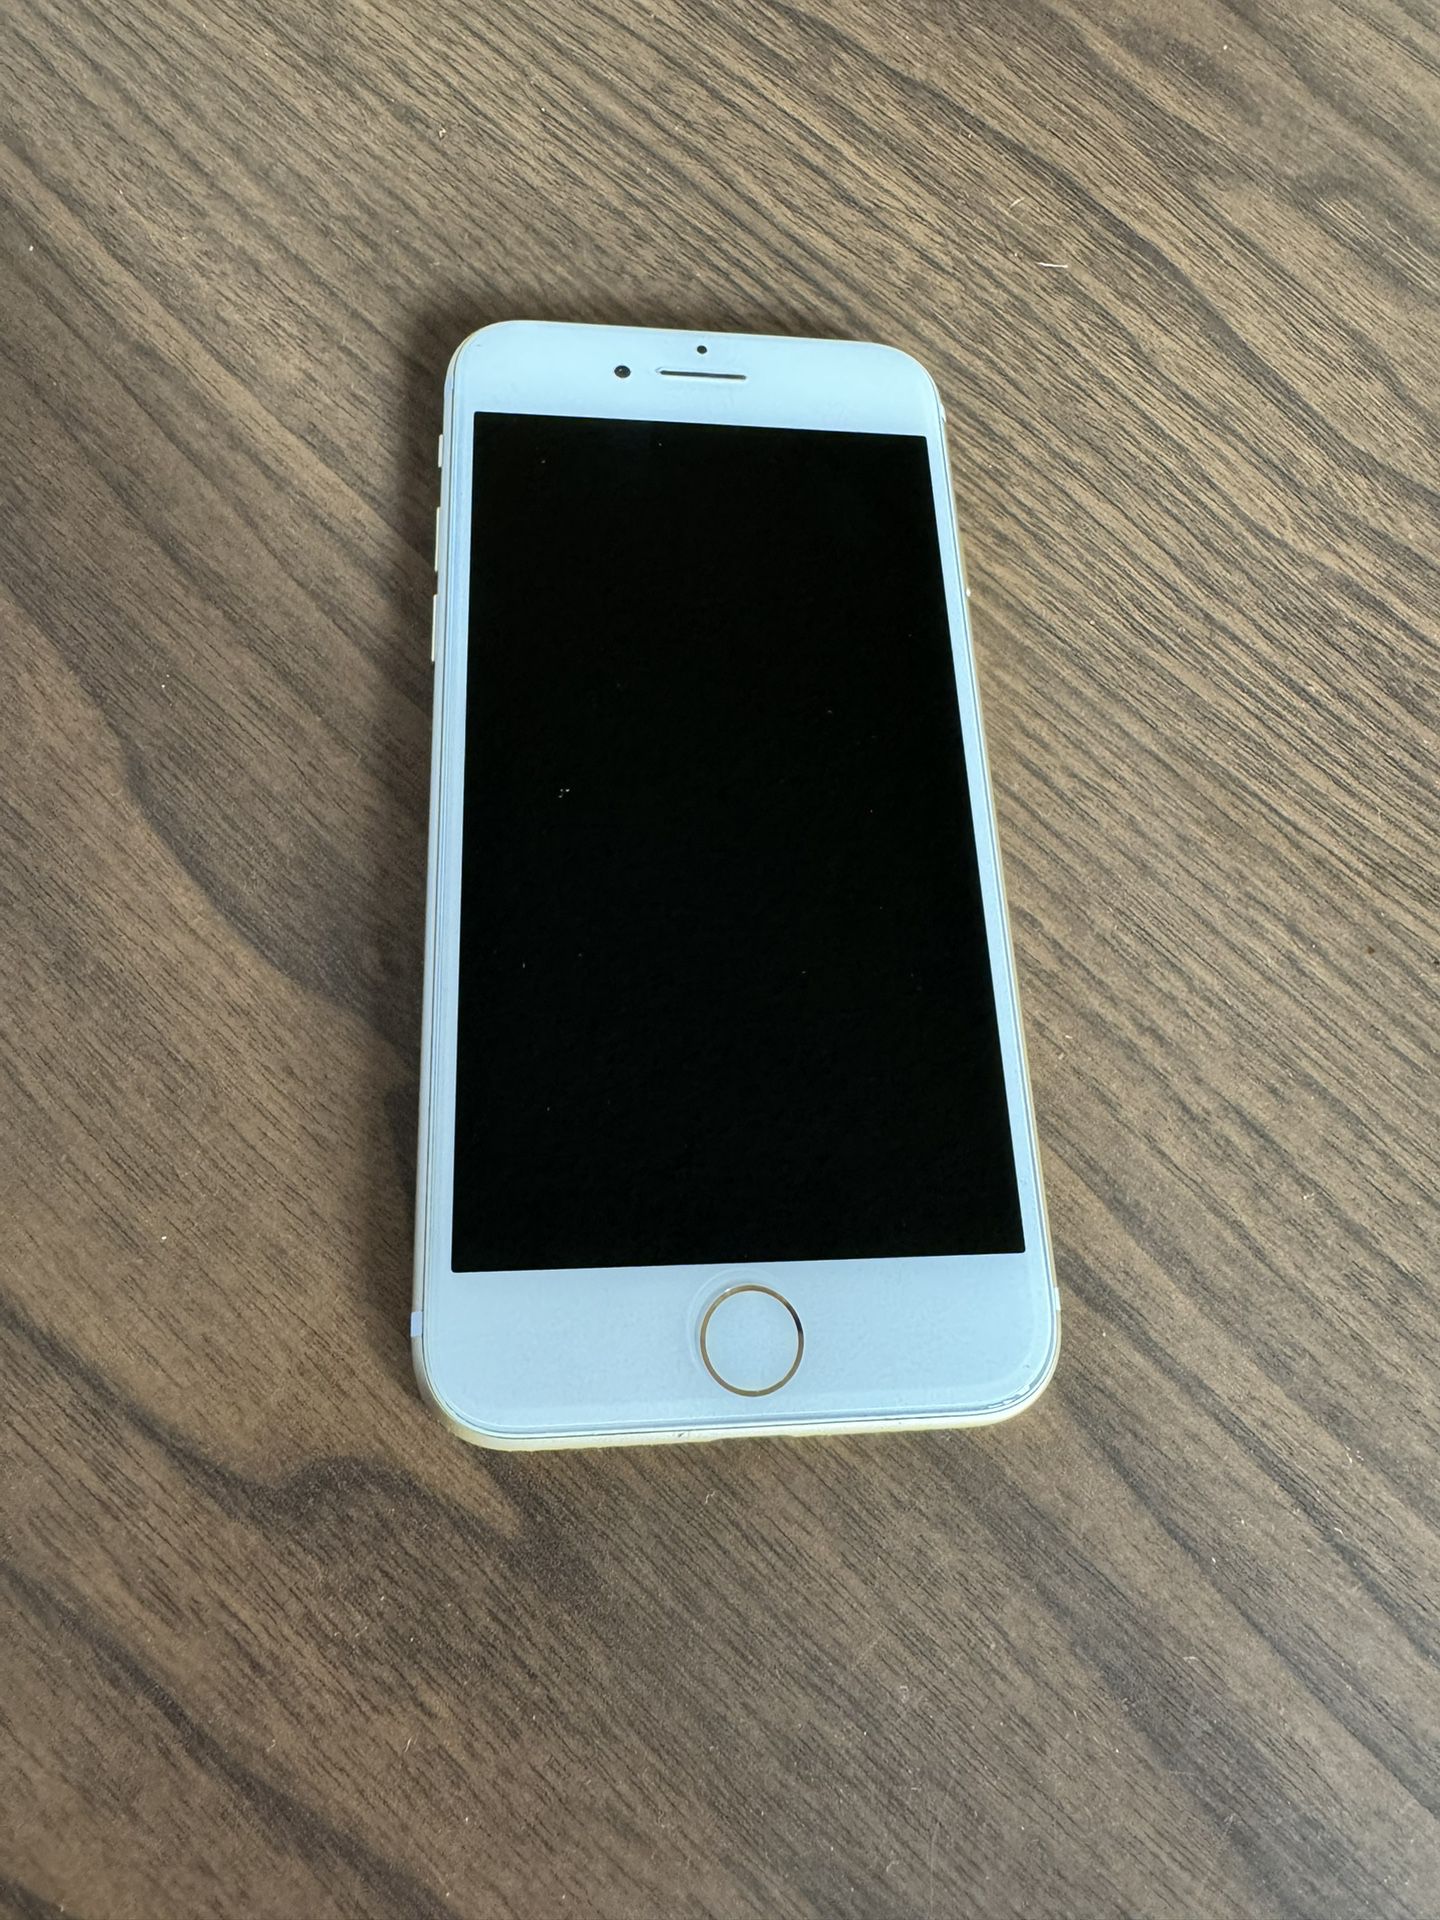 Apple iPhone 7 32gb Gold UNLOCKED 